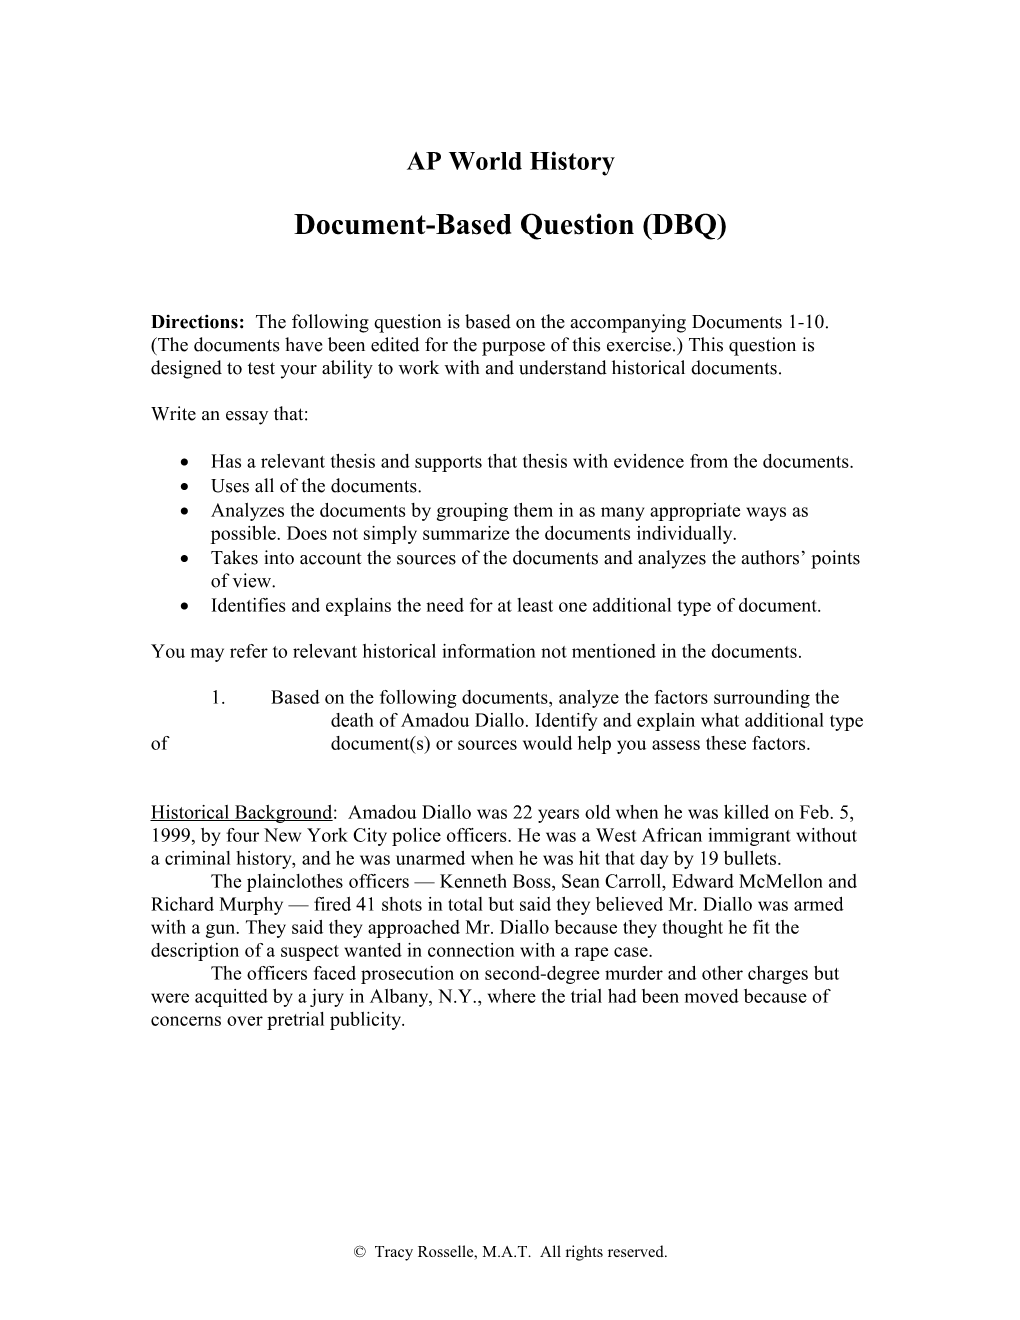 Document-Based Question (DBQ)